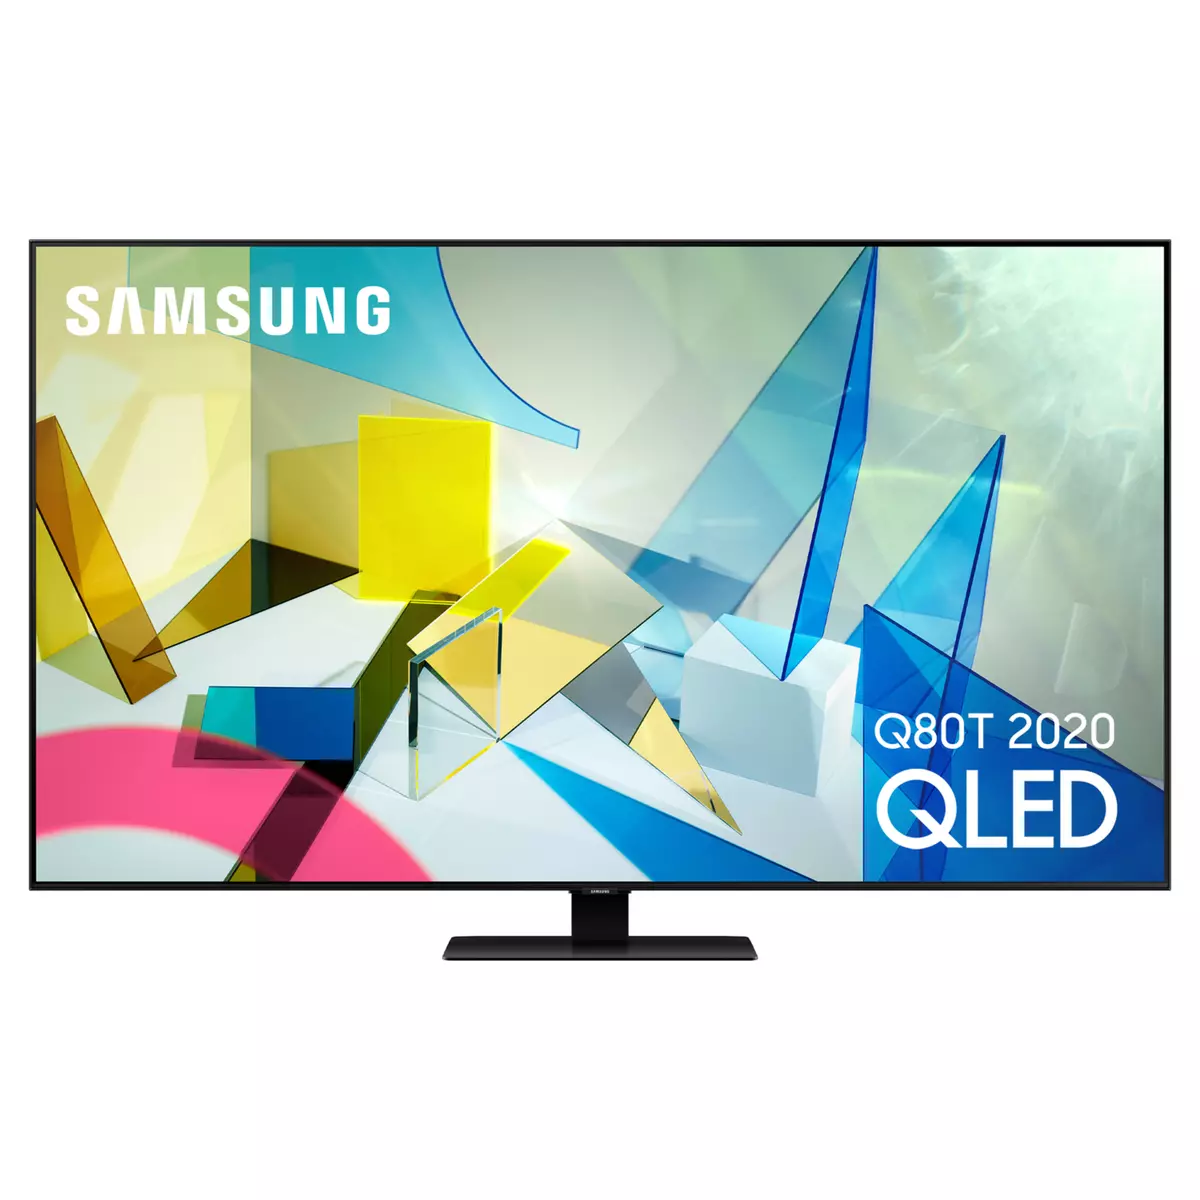 SAMSUNG QE55Q80T 2020 TV QLED 4K UHD 138 cm Smart TV